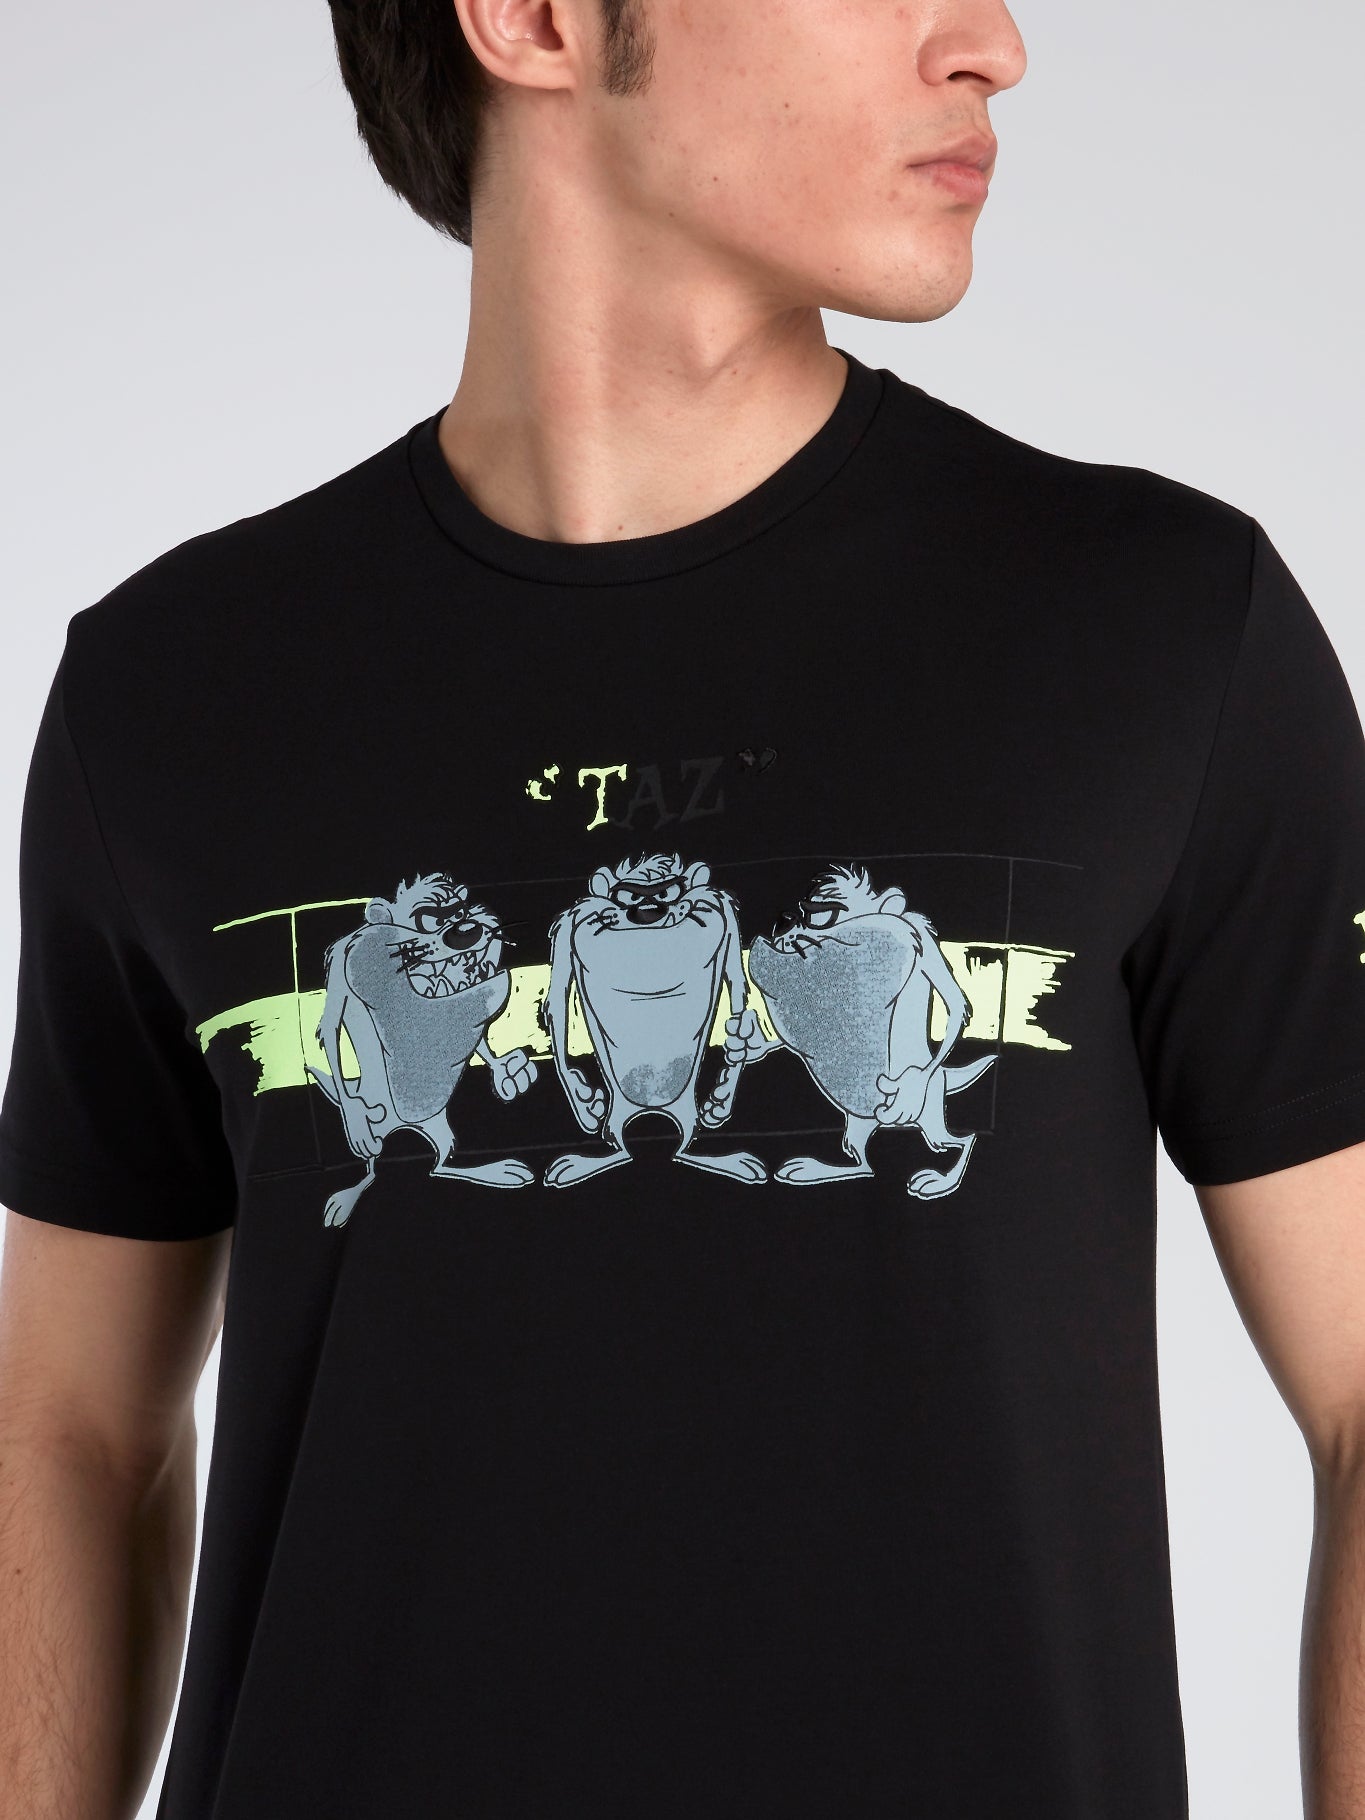 Taz Black Printed T-Shirt